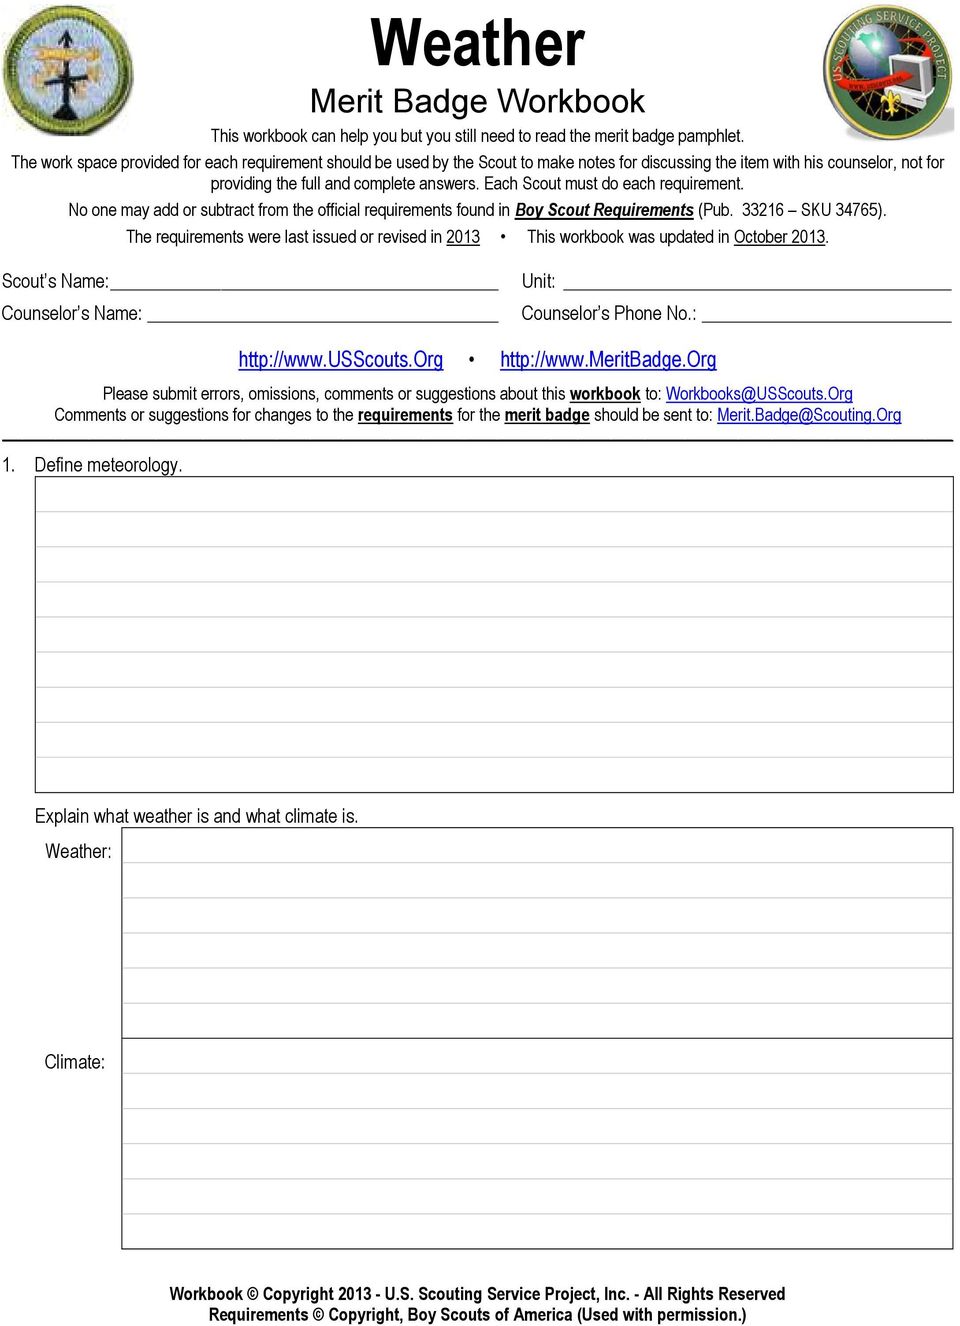 Weather Merit Badge Workbook - PDF Free Download Inside Weather Merit Badge Worksheet